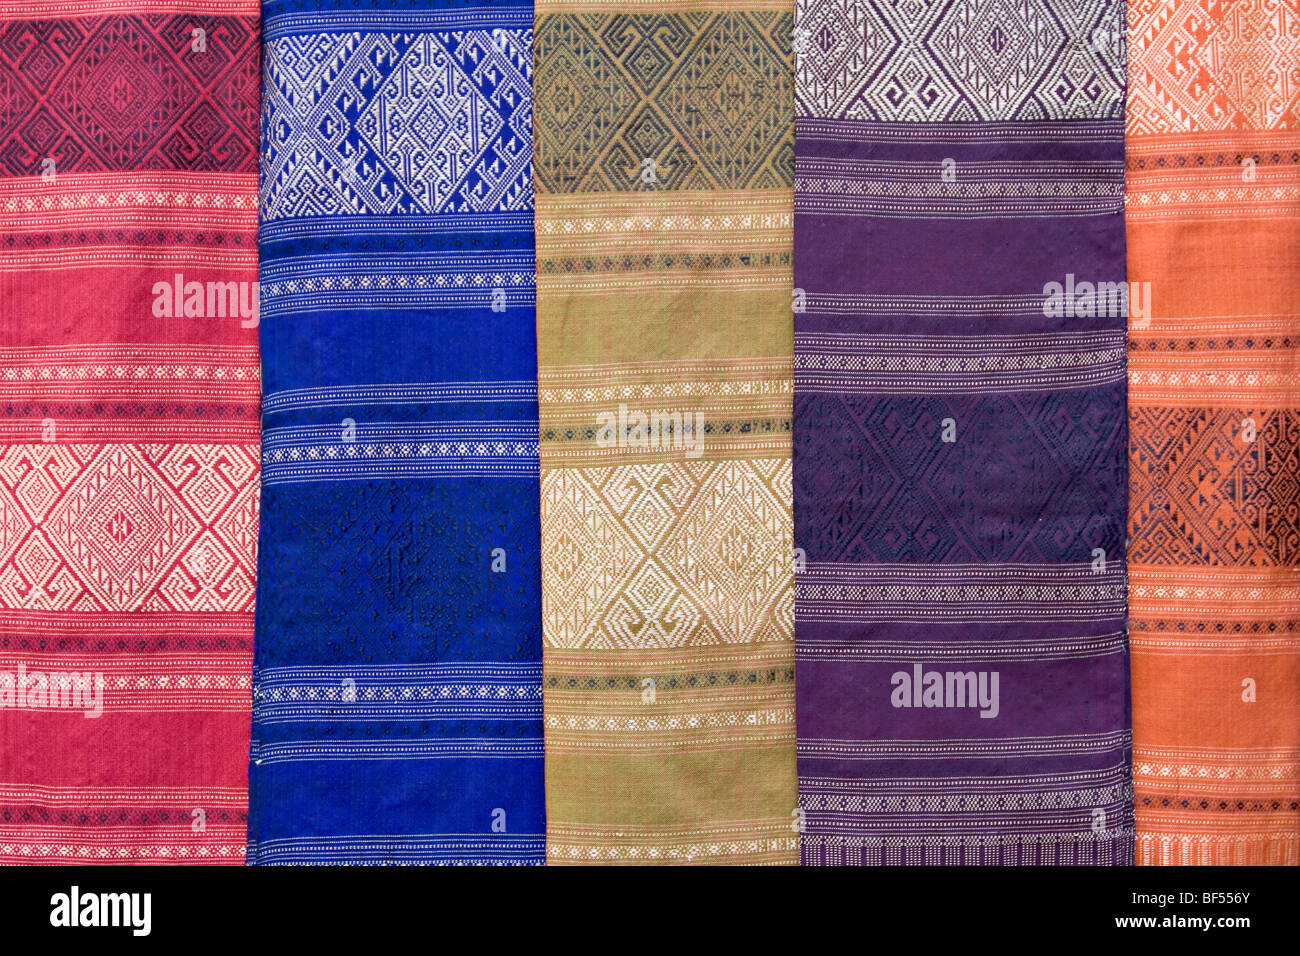 Colourful silk textiles on display at a market stall in Luang Prabang, Laos Stock Photo